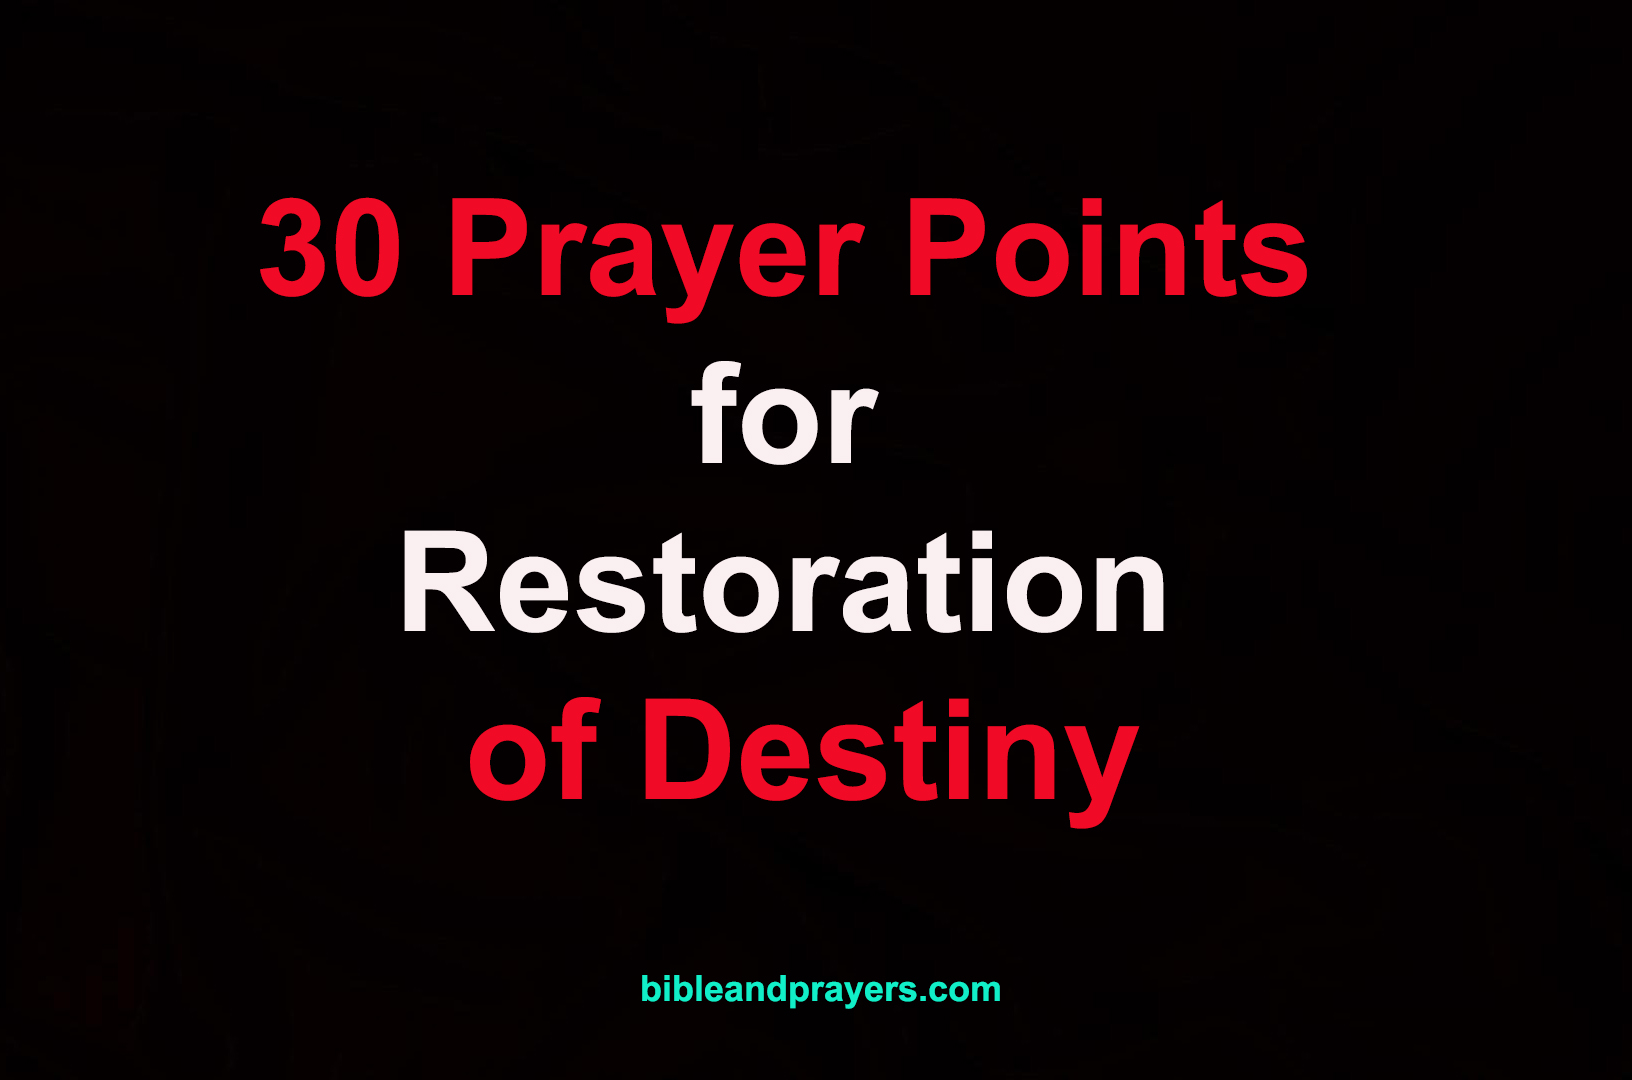 30 Prayer Points for Restoration of Destiny